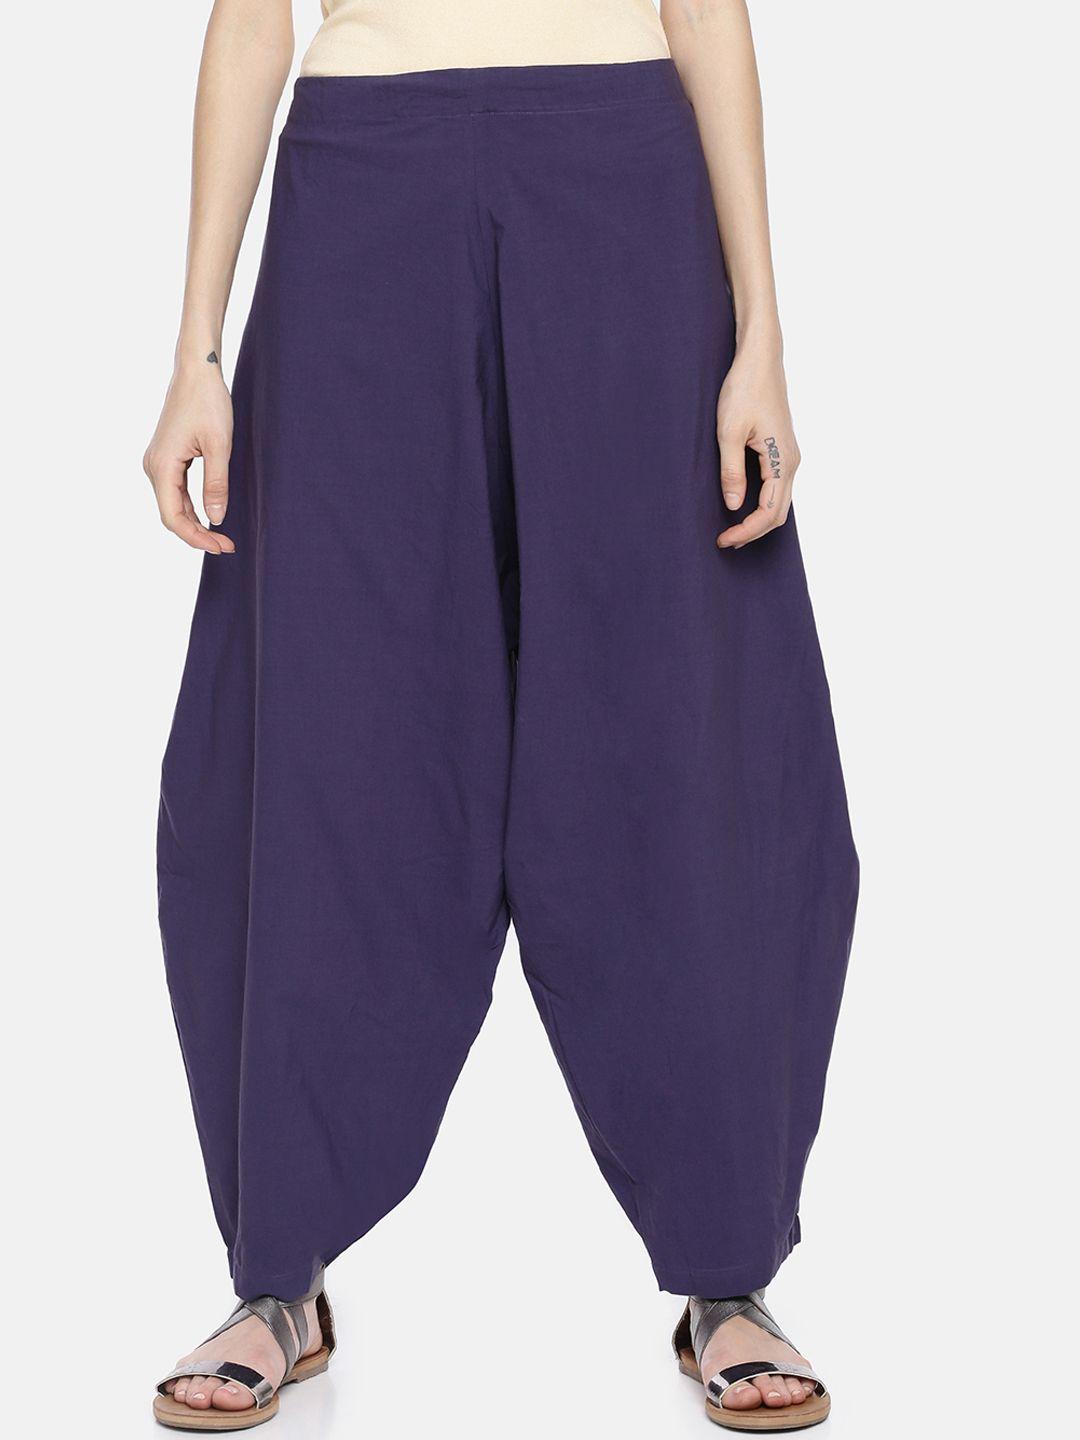 grass by gitika goyal women purple loose fit solid drop crotch trousers